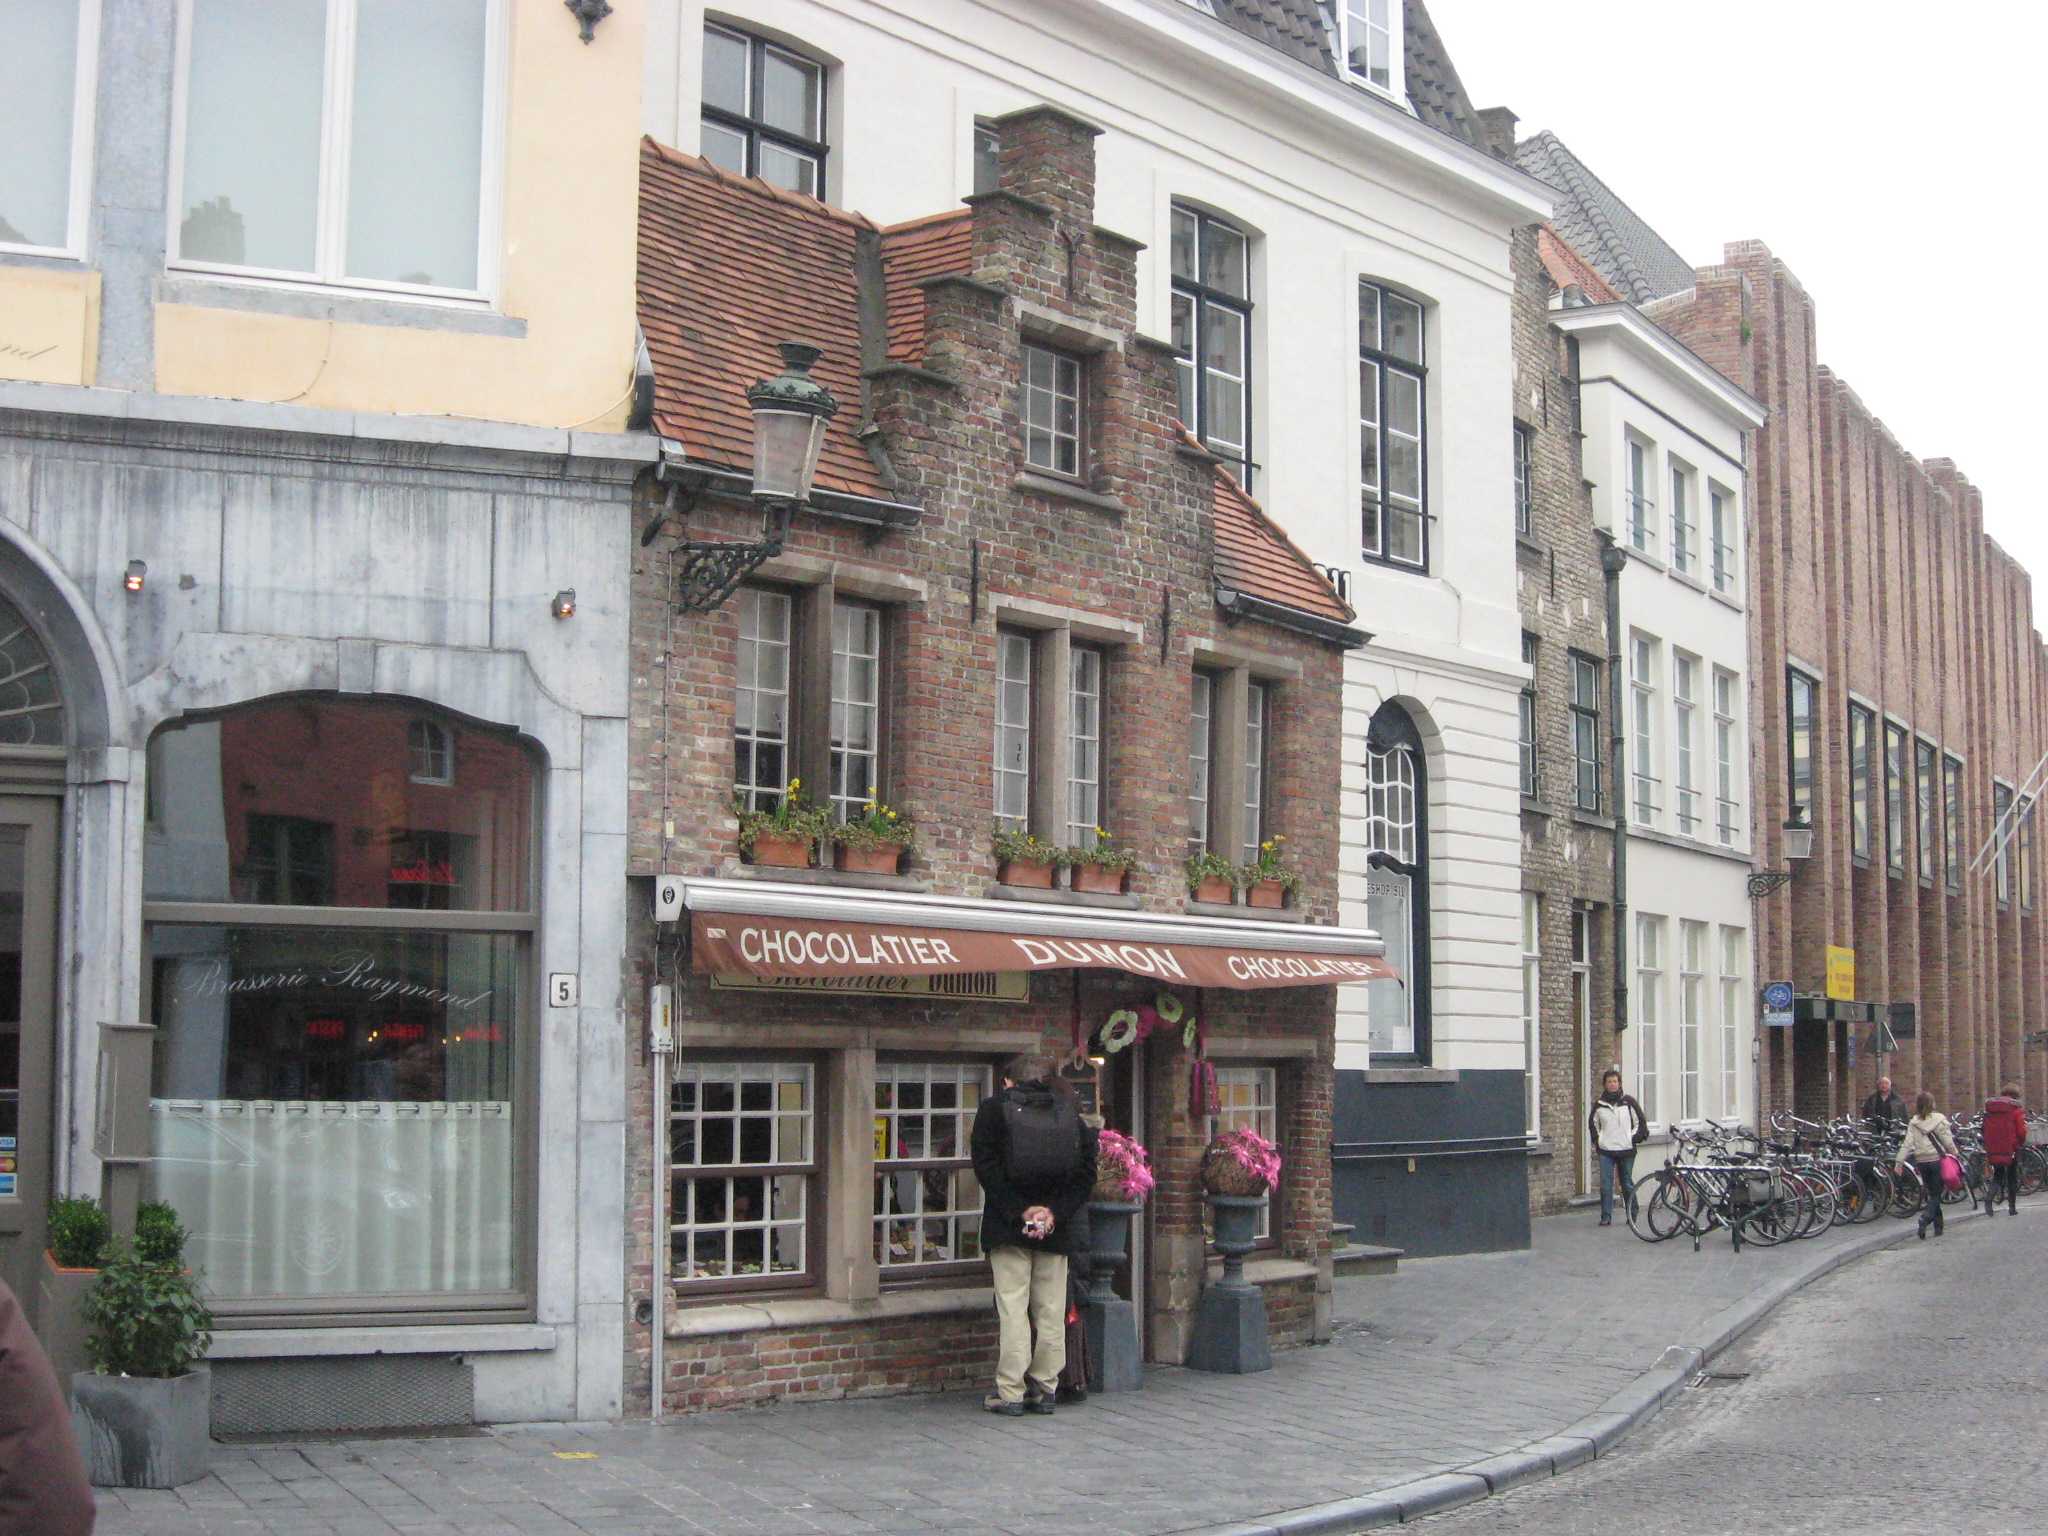 Chocolatier Dumon, Bruges, Belgium